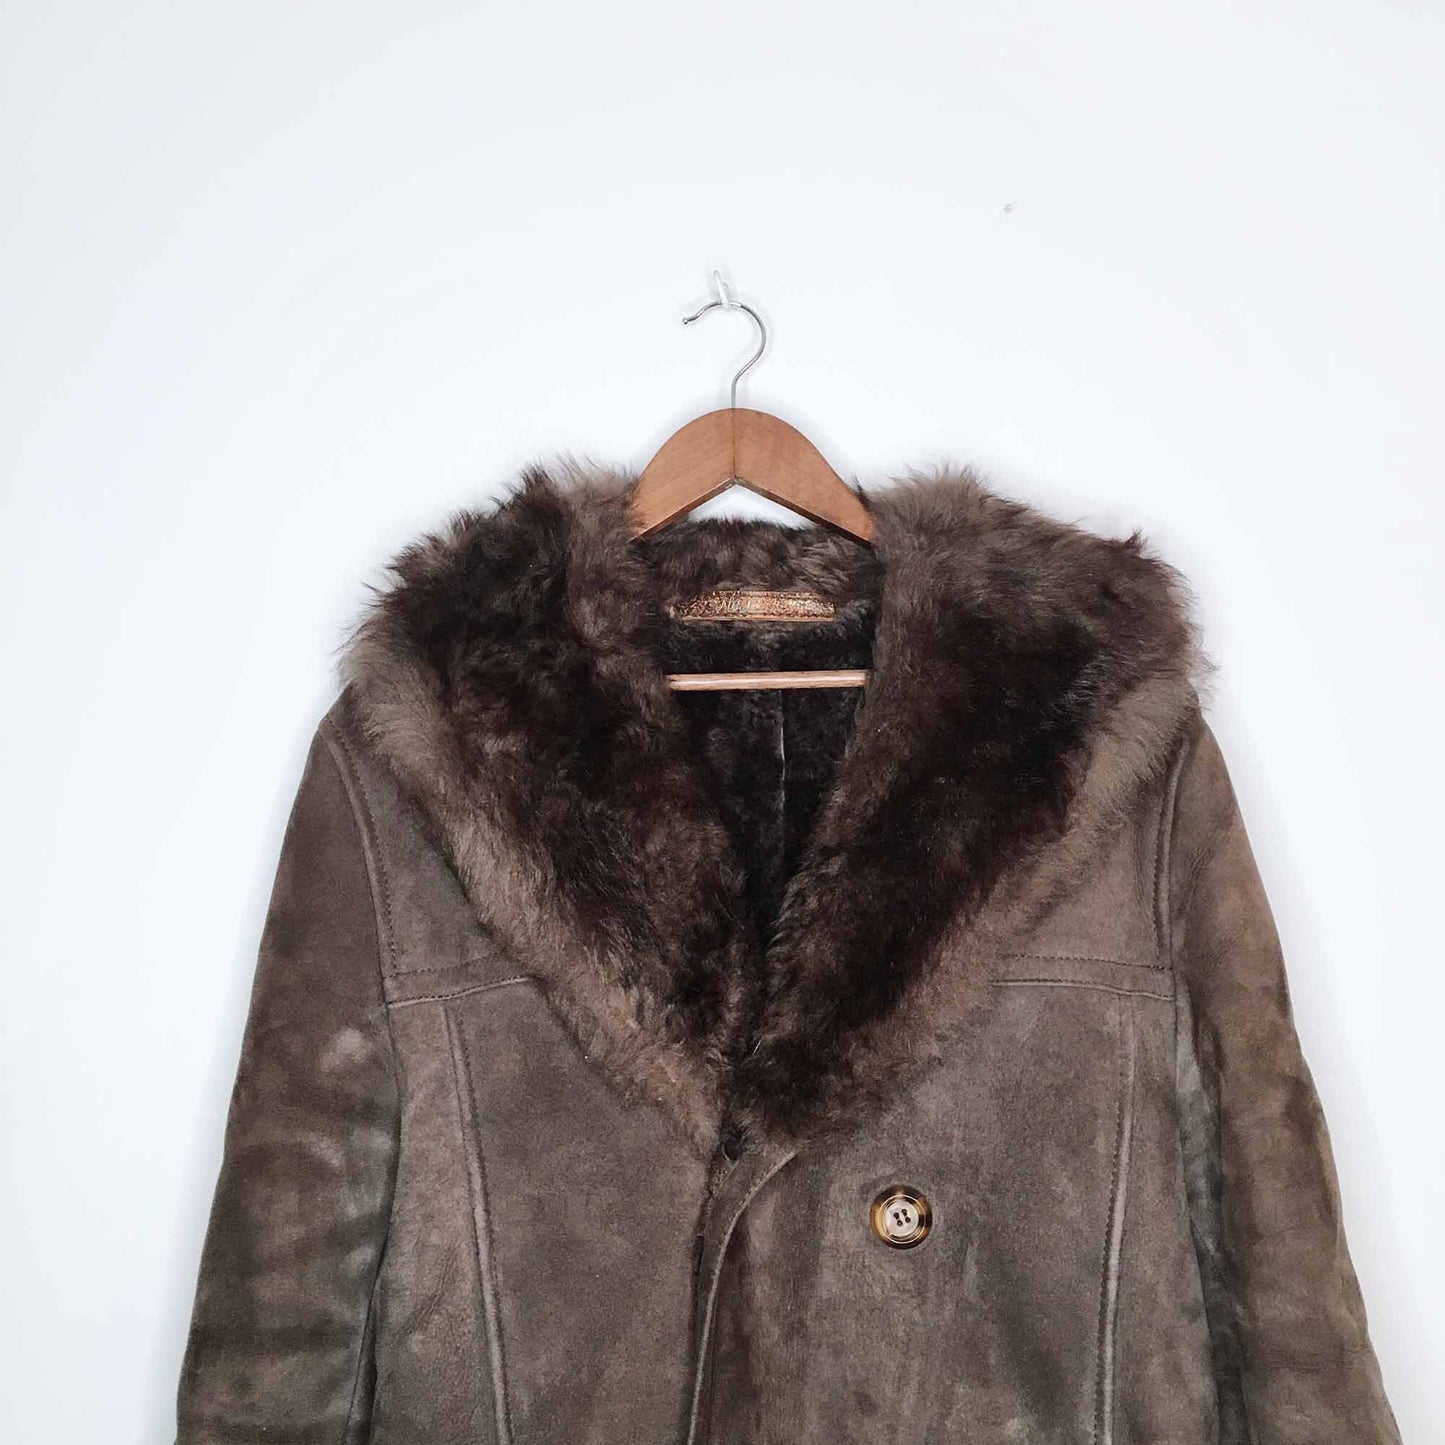 Long sheepskin jacket with fur collar - size Medium